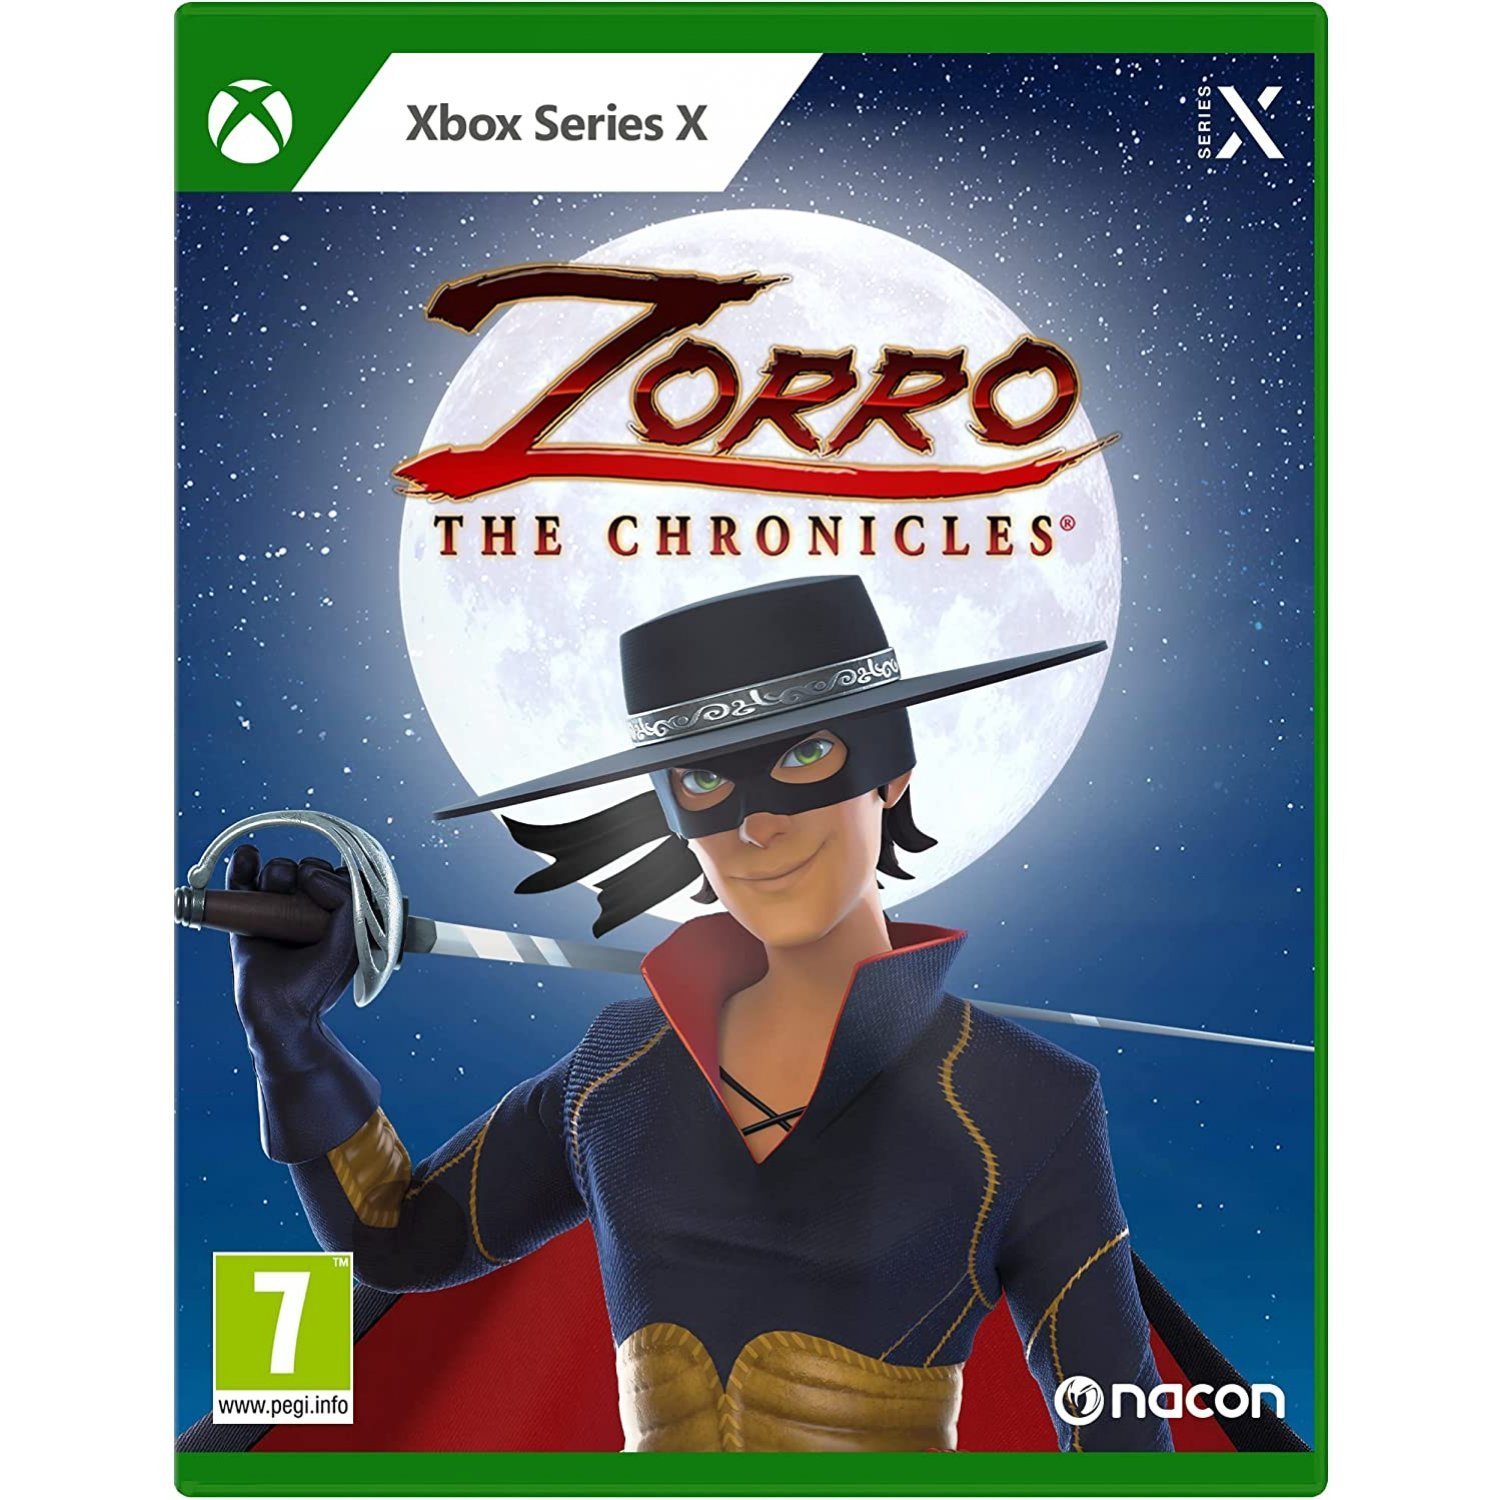 Bedste Zorro Xbox i 2023